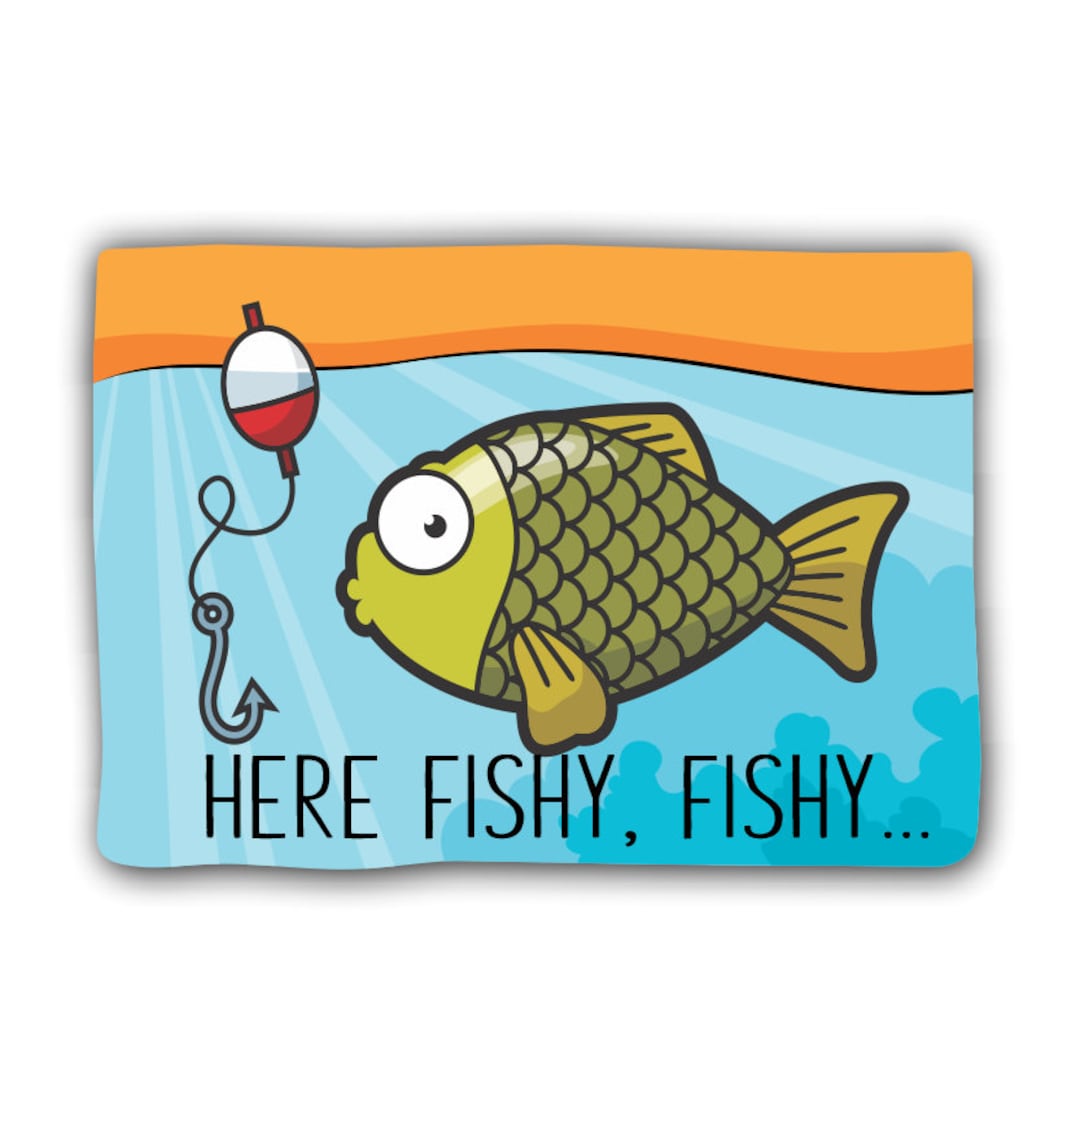 I Catch A Lot of Fish But My Wife Was My Best Catch Ever Vinyl Waterproof Sticker Decal Car Laptop Wall Window Bumper Sticker 6